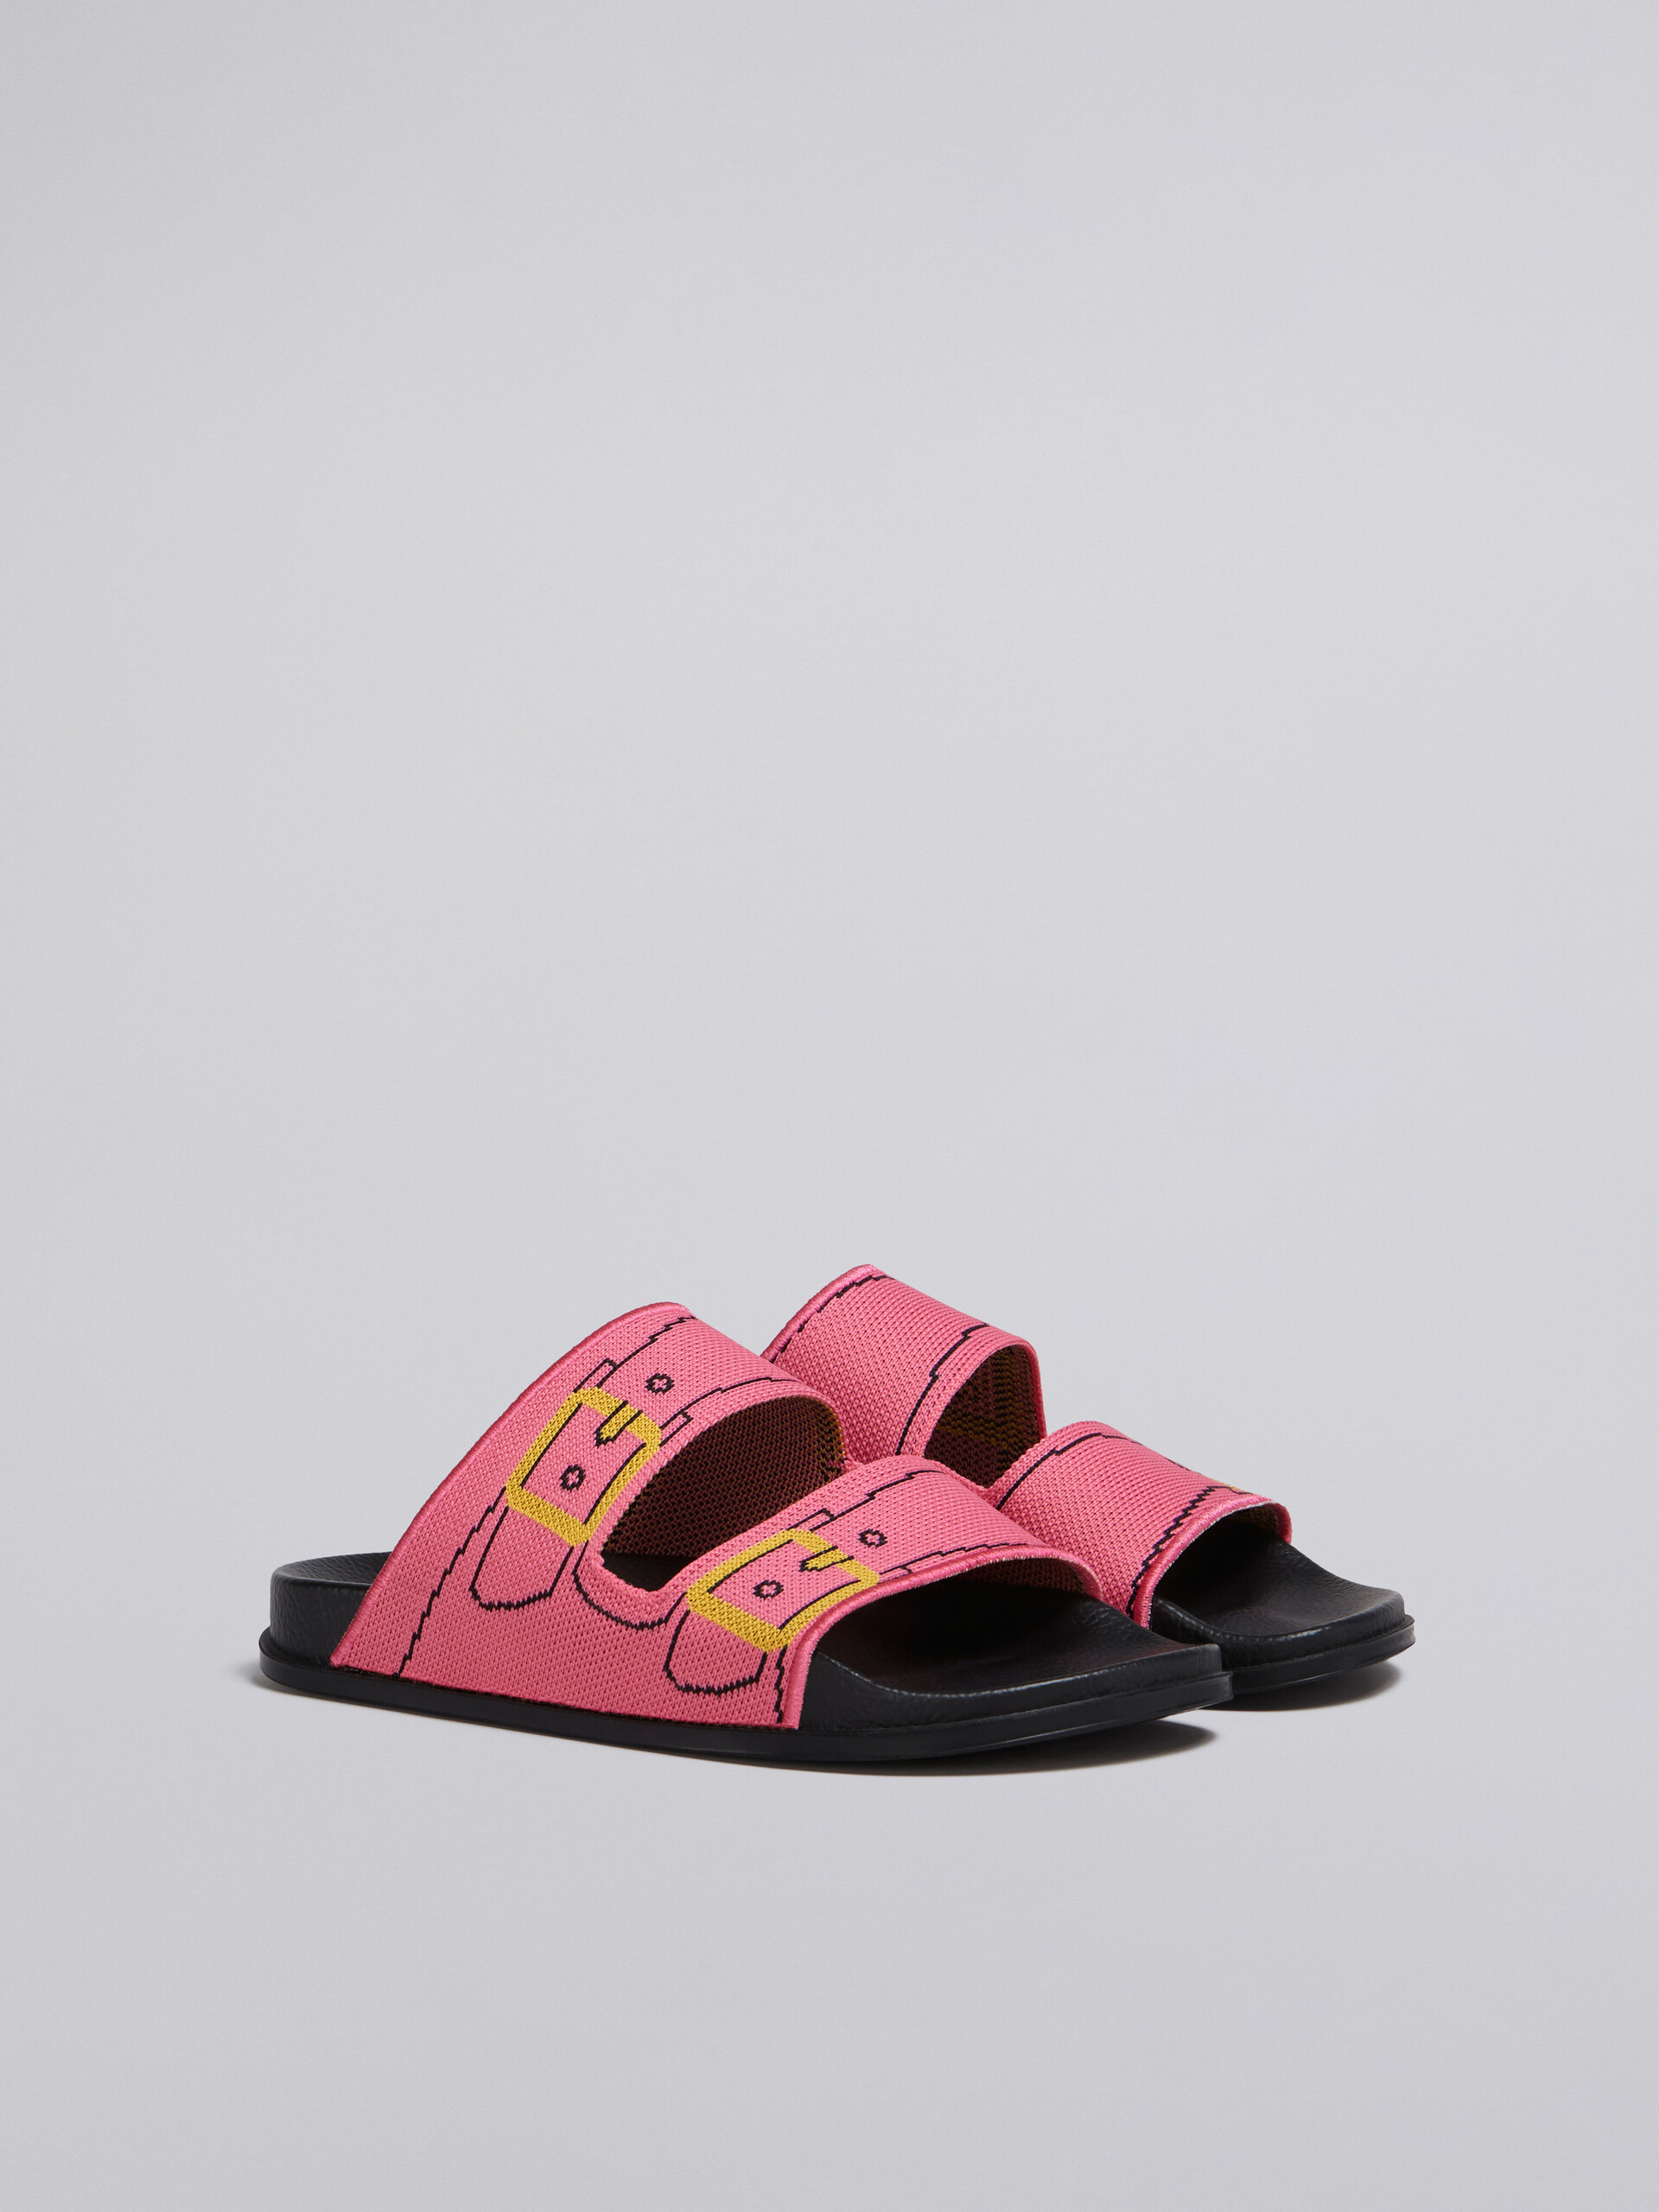 Pink trompe l'œil jacquard two-strap slide - Sandals - Image 2